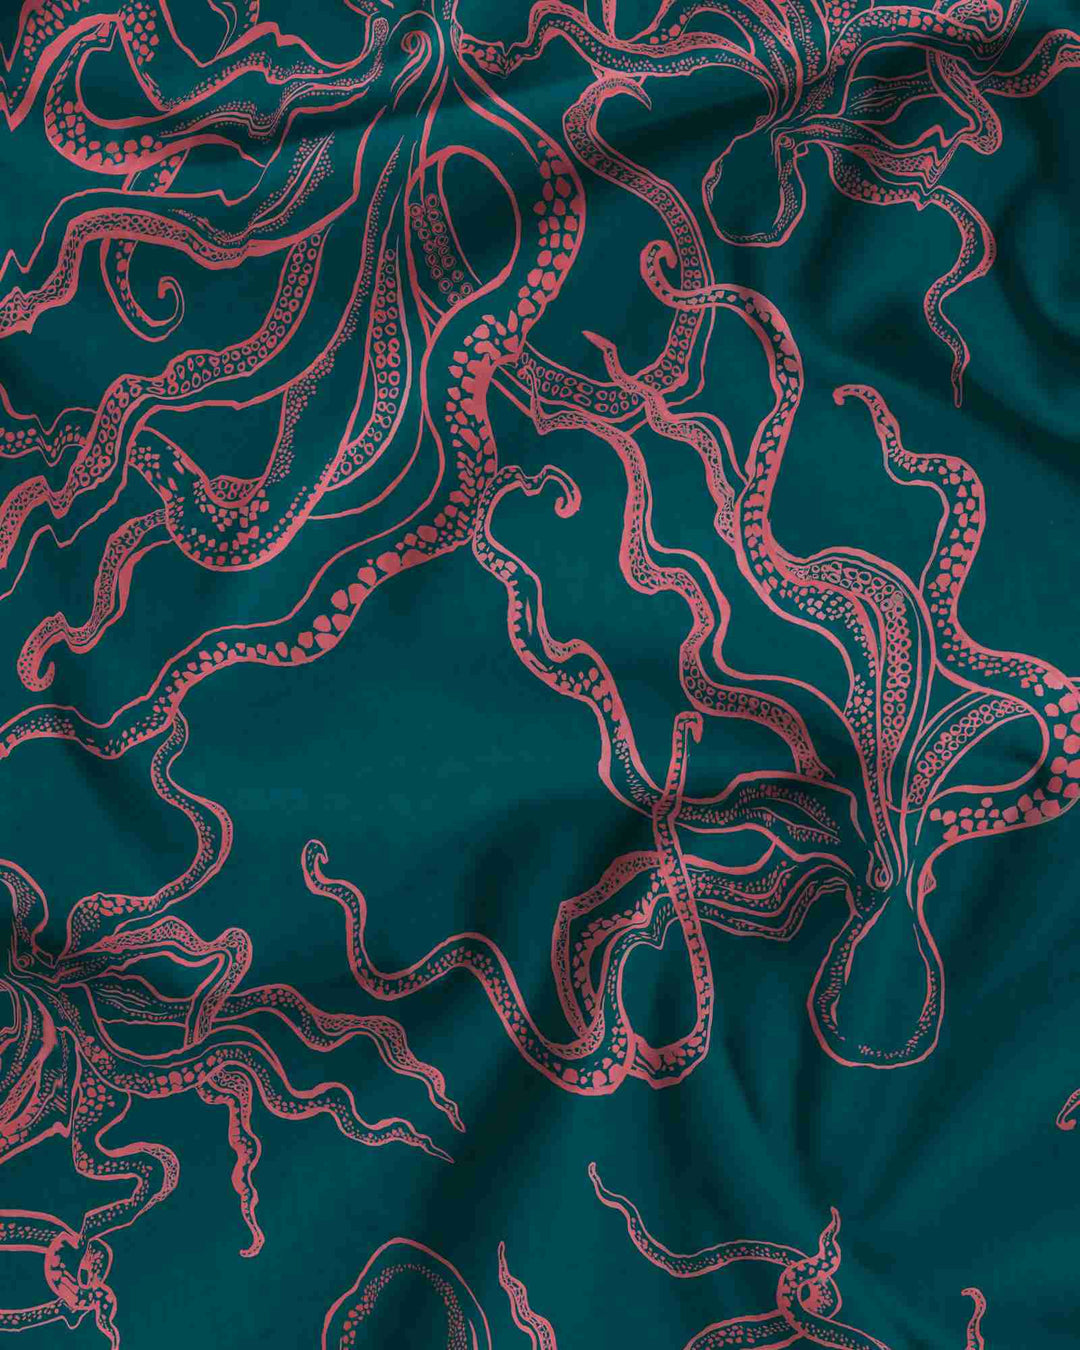 Women's cotton pyjamas set - Pink octopuses on turquoise